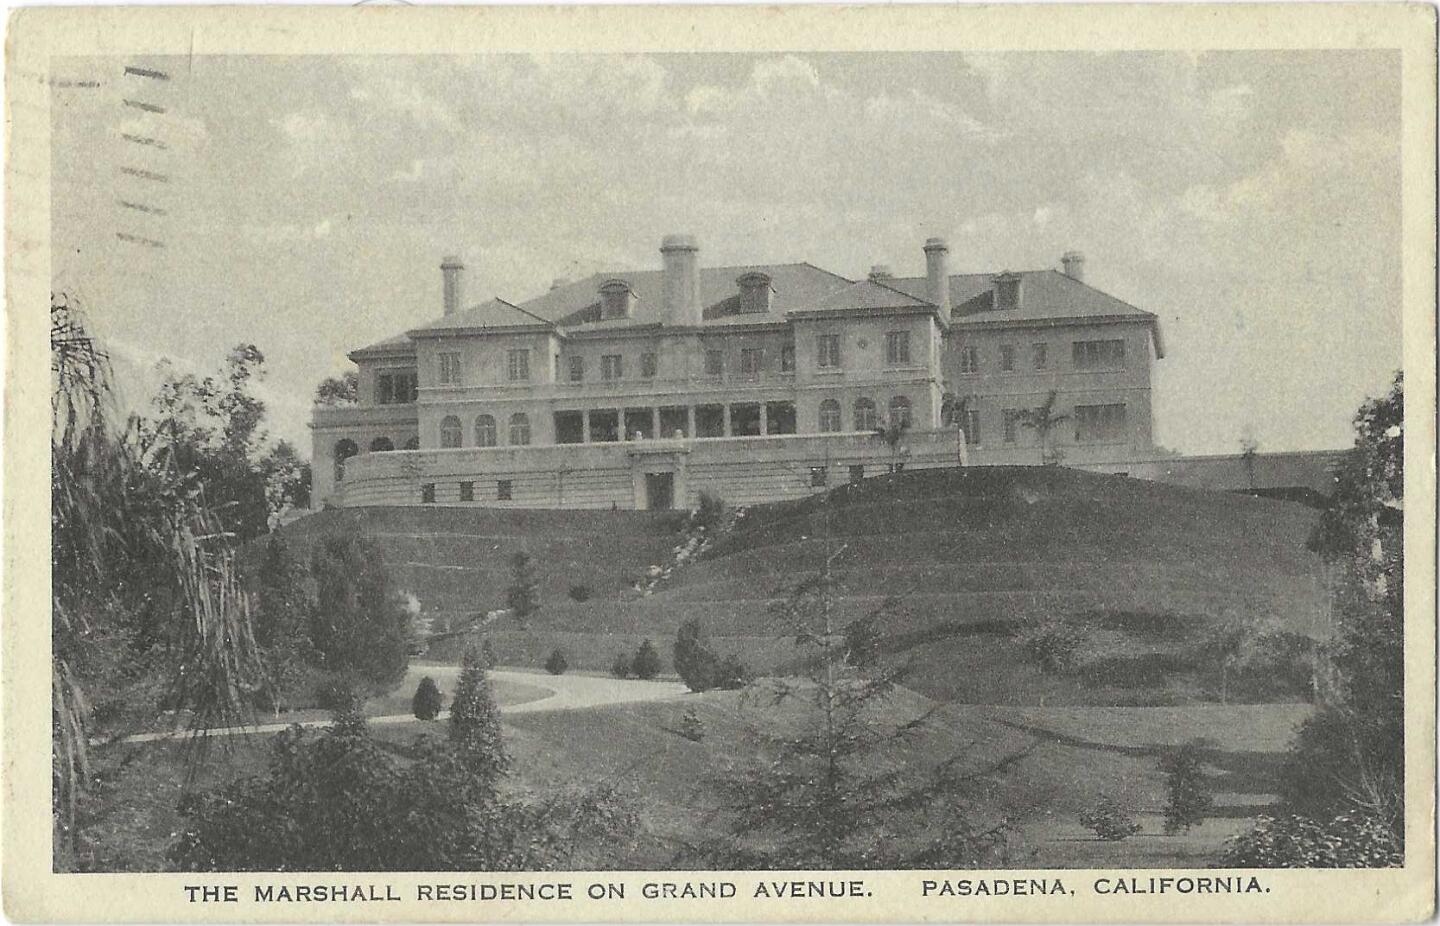 The Marshall Residence on Grand Avenue, Pasadena, California